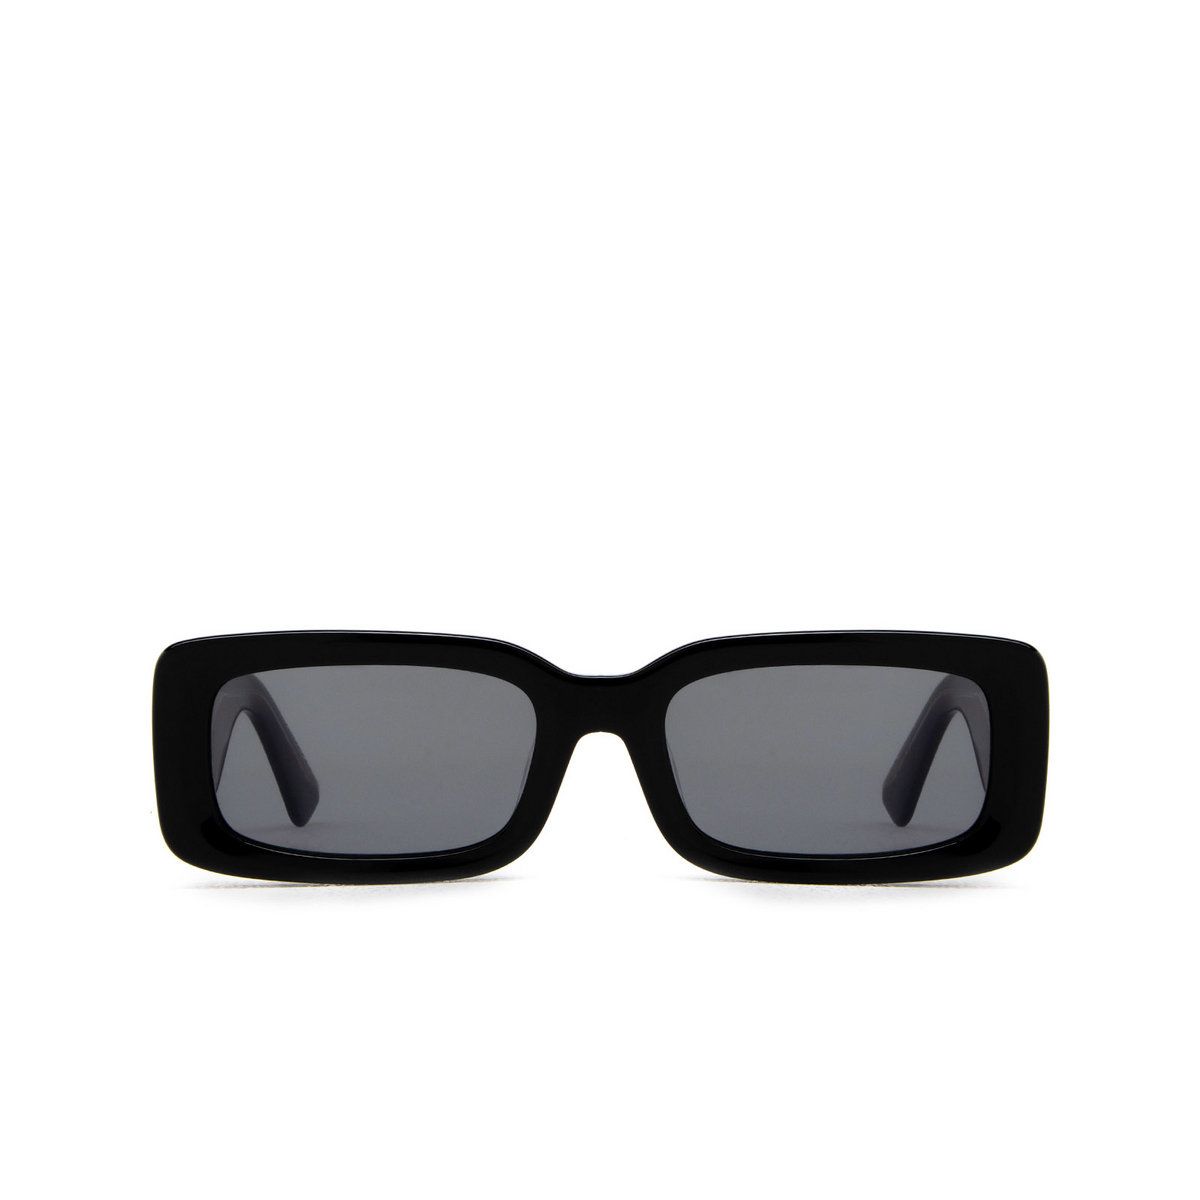 Akila VERVE Sunglasses 01/01 Black - front view